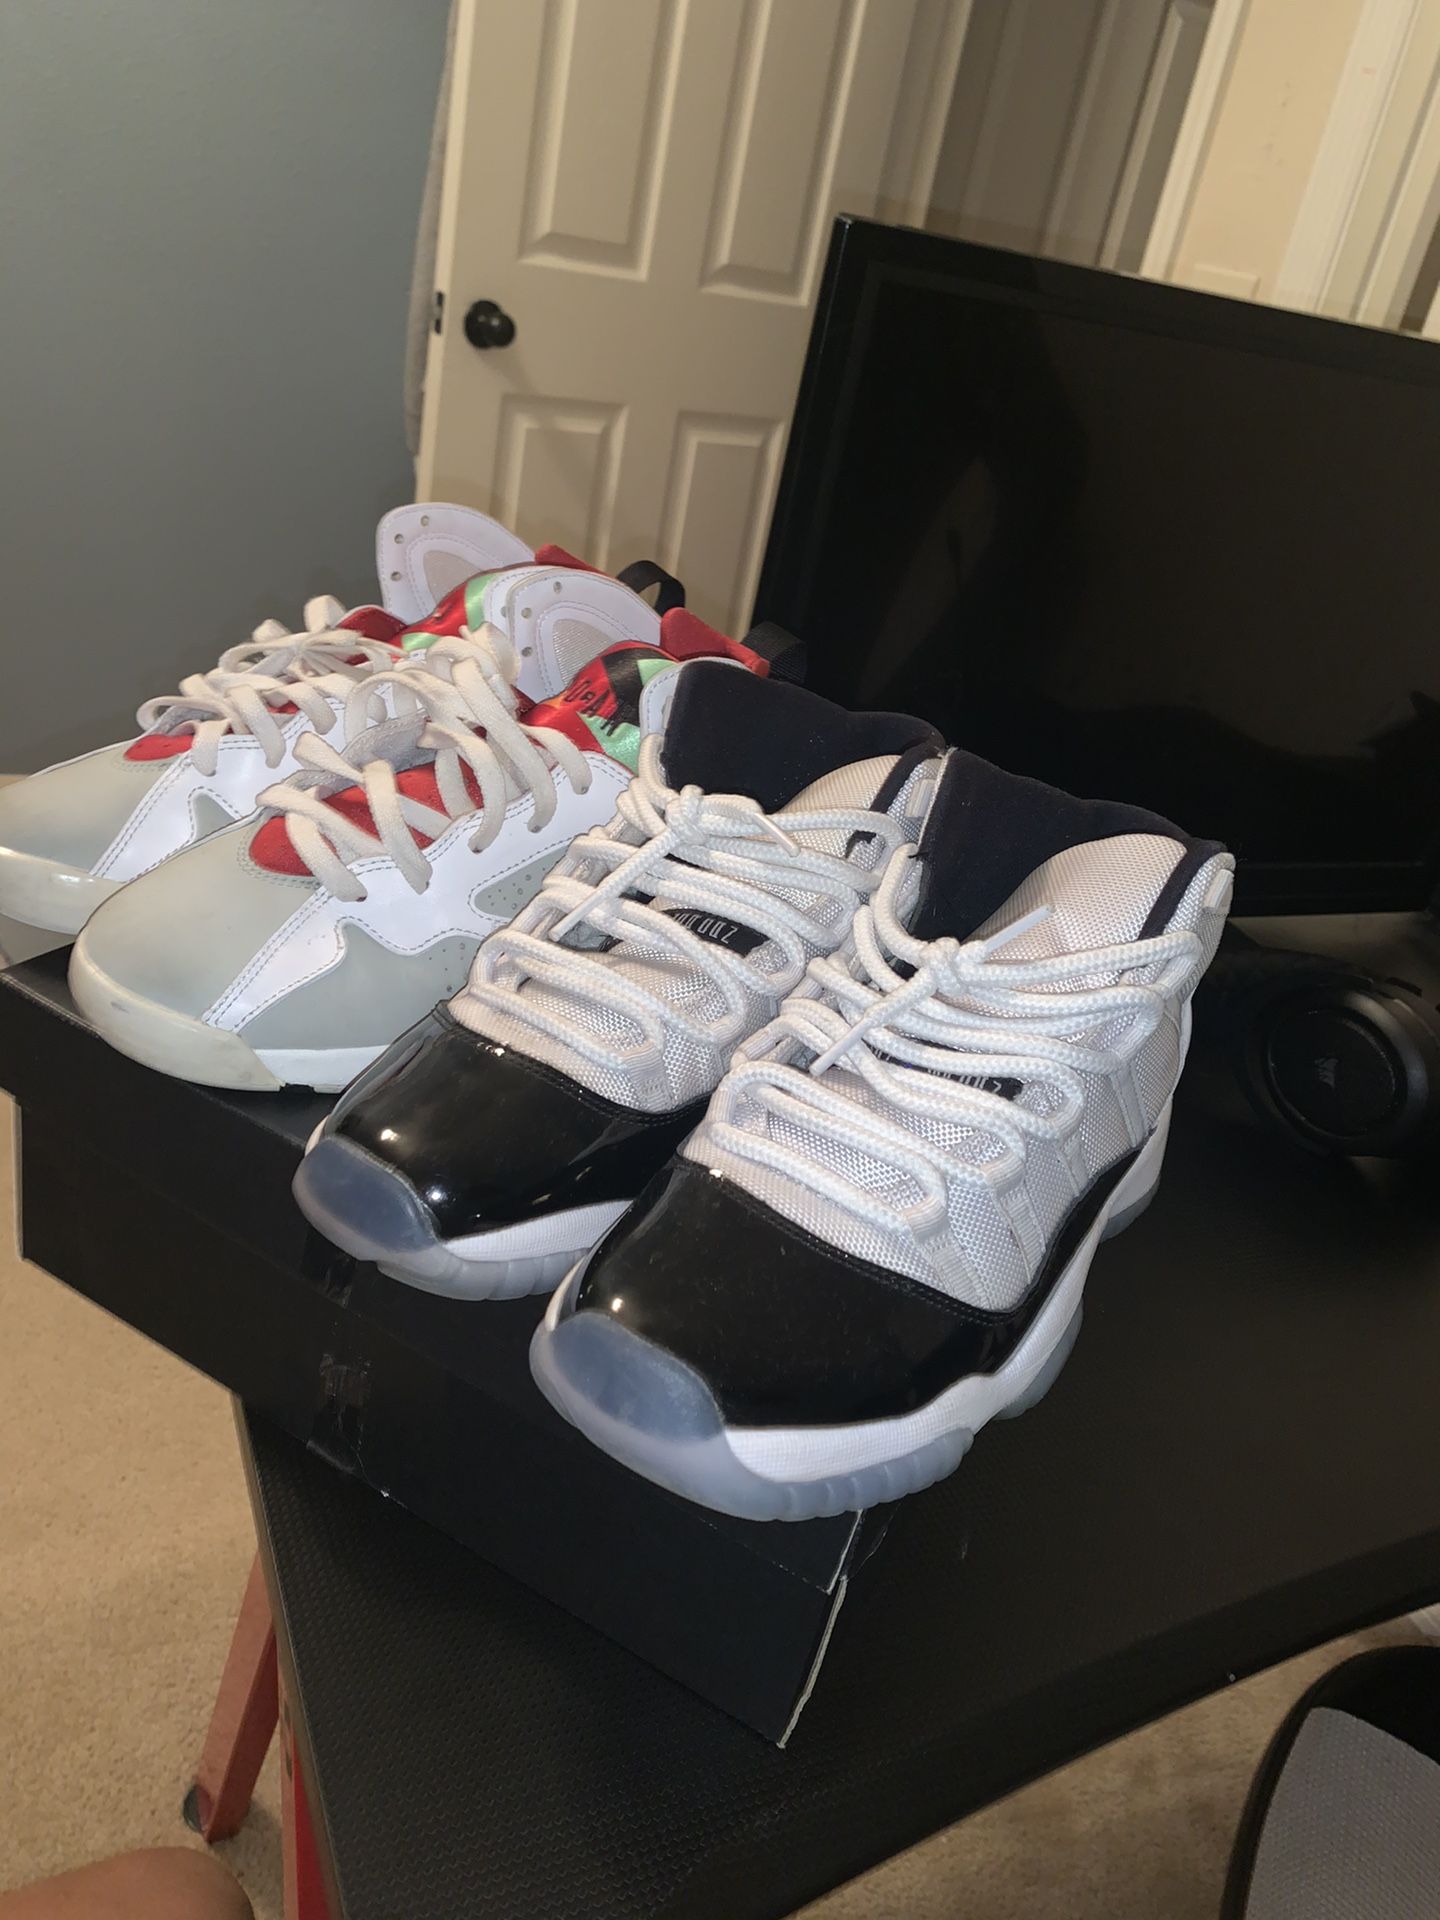 Jordans size 6.5 and 7